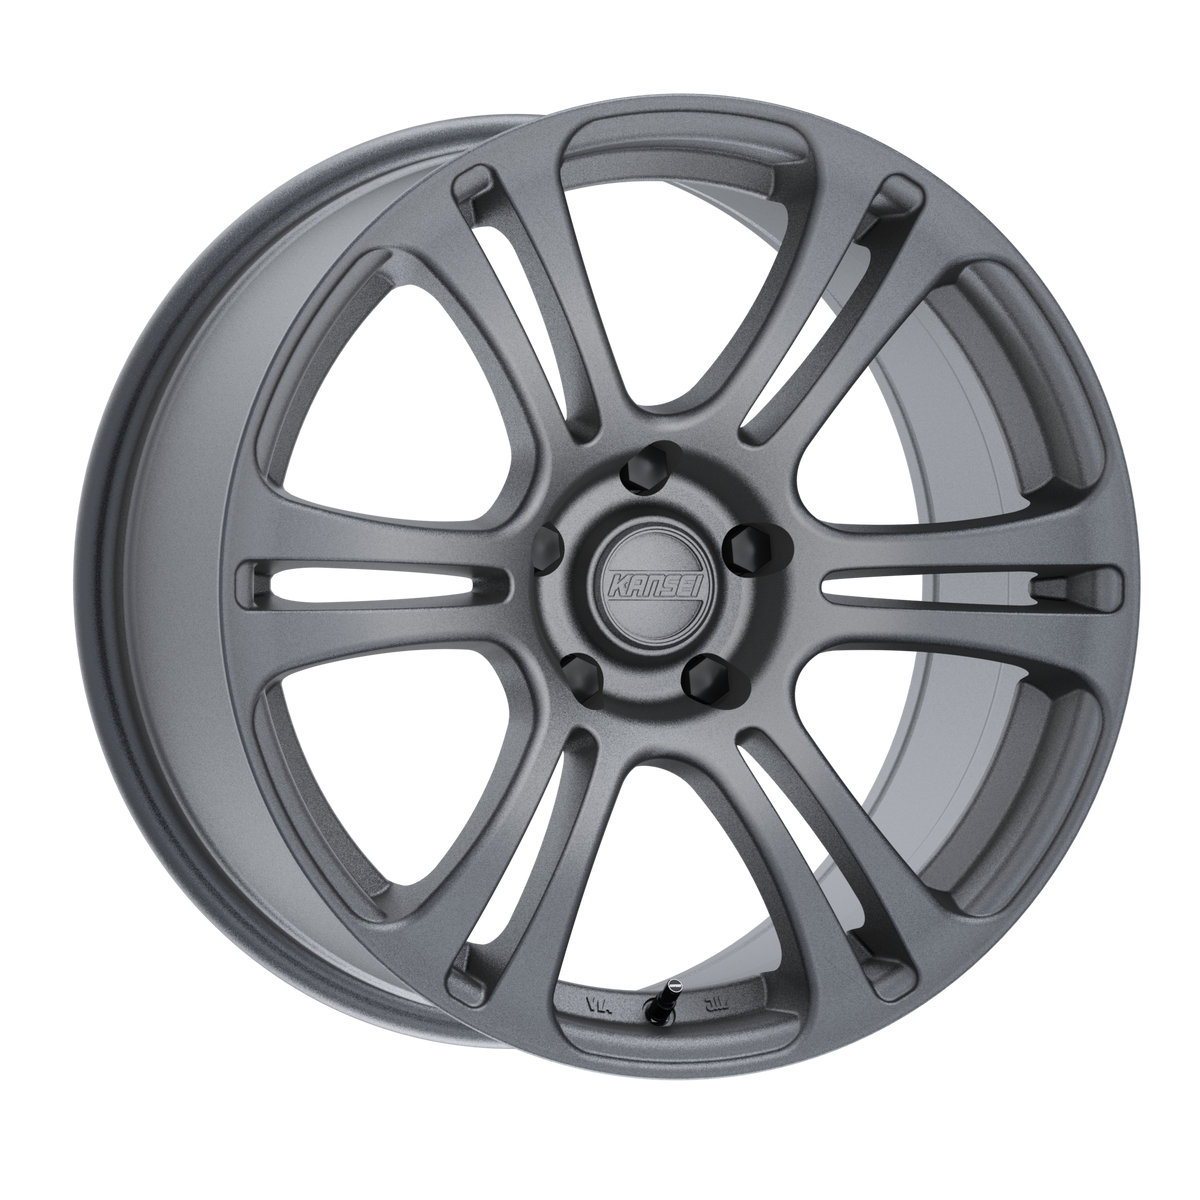 K16G NEO Wheel, Size: 18" x 9.50", Bolt Pattern: 5 x 120 mm, Backspace: 6.12" [Finish: Gunmetal]